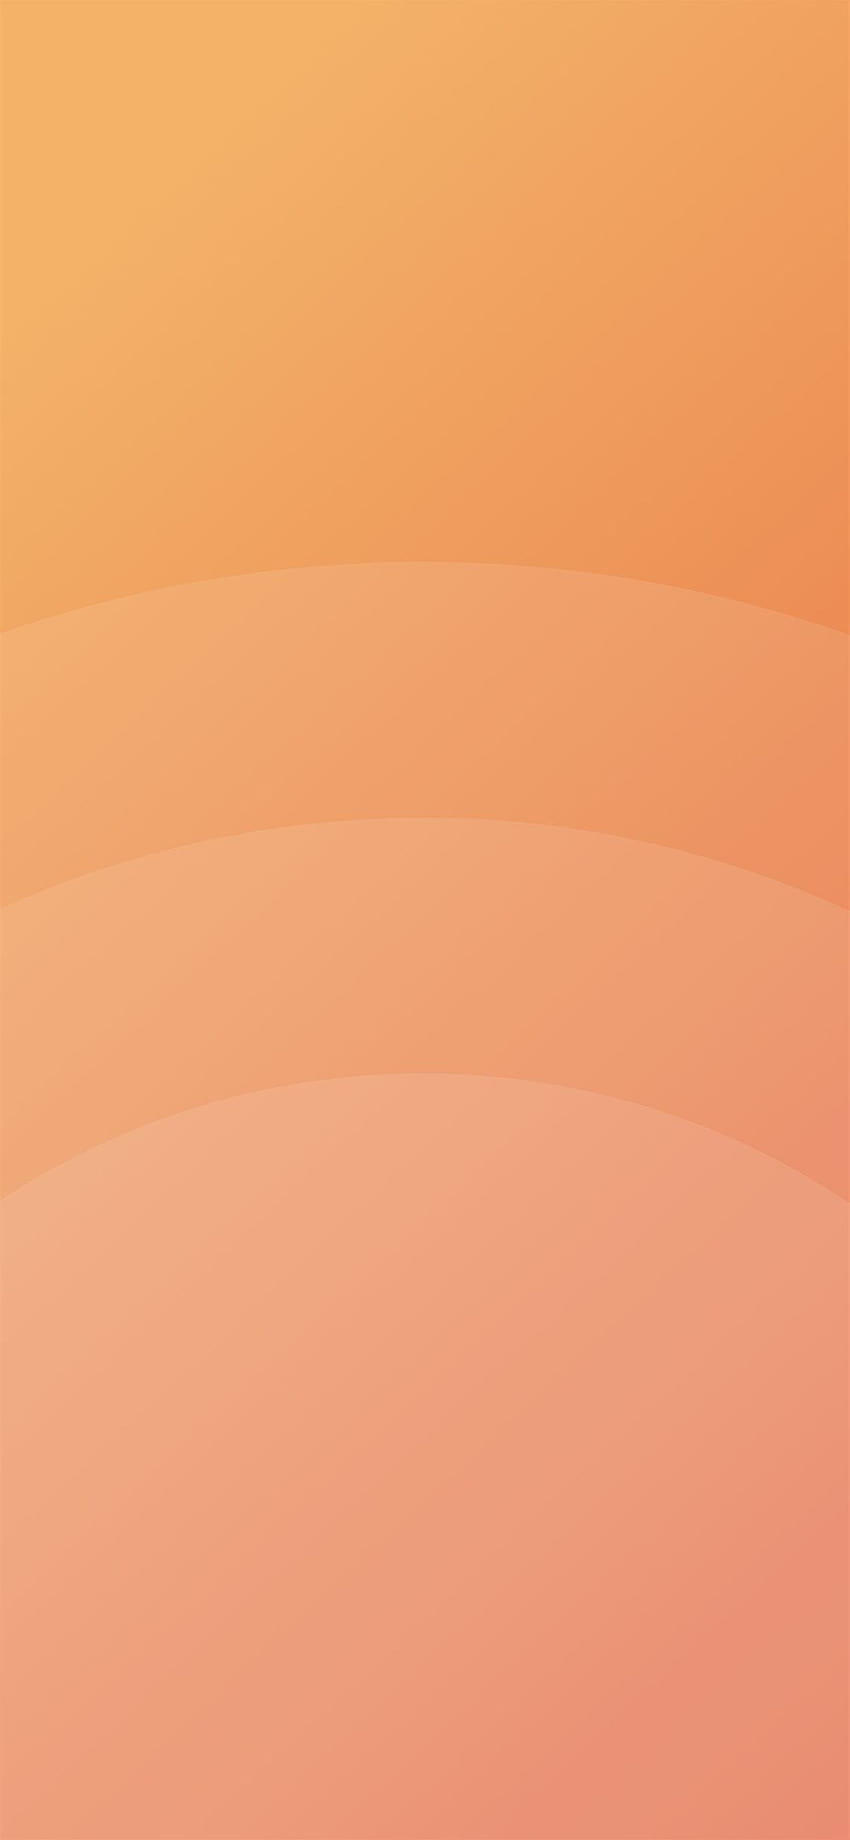 Lingkaran oranye sederhana latar belakang pola minimal iPhone X, oranye minimalis wallpaper ponsel HD